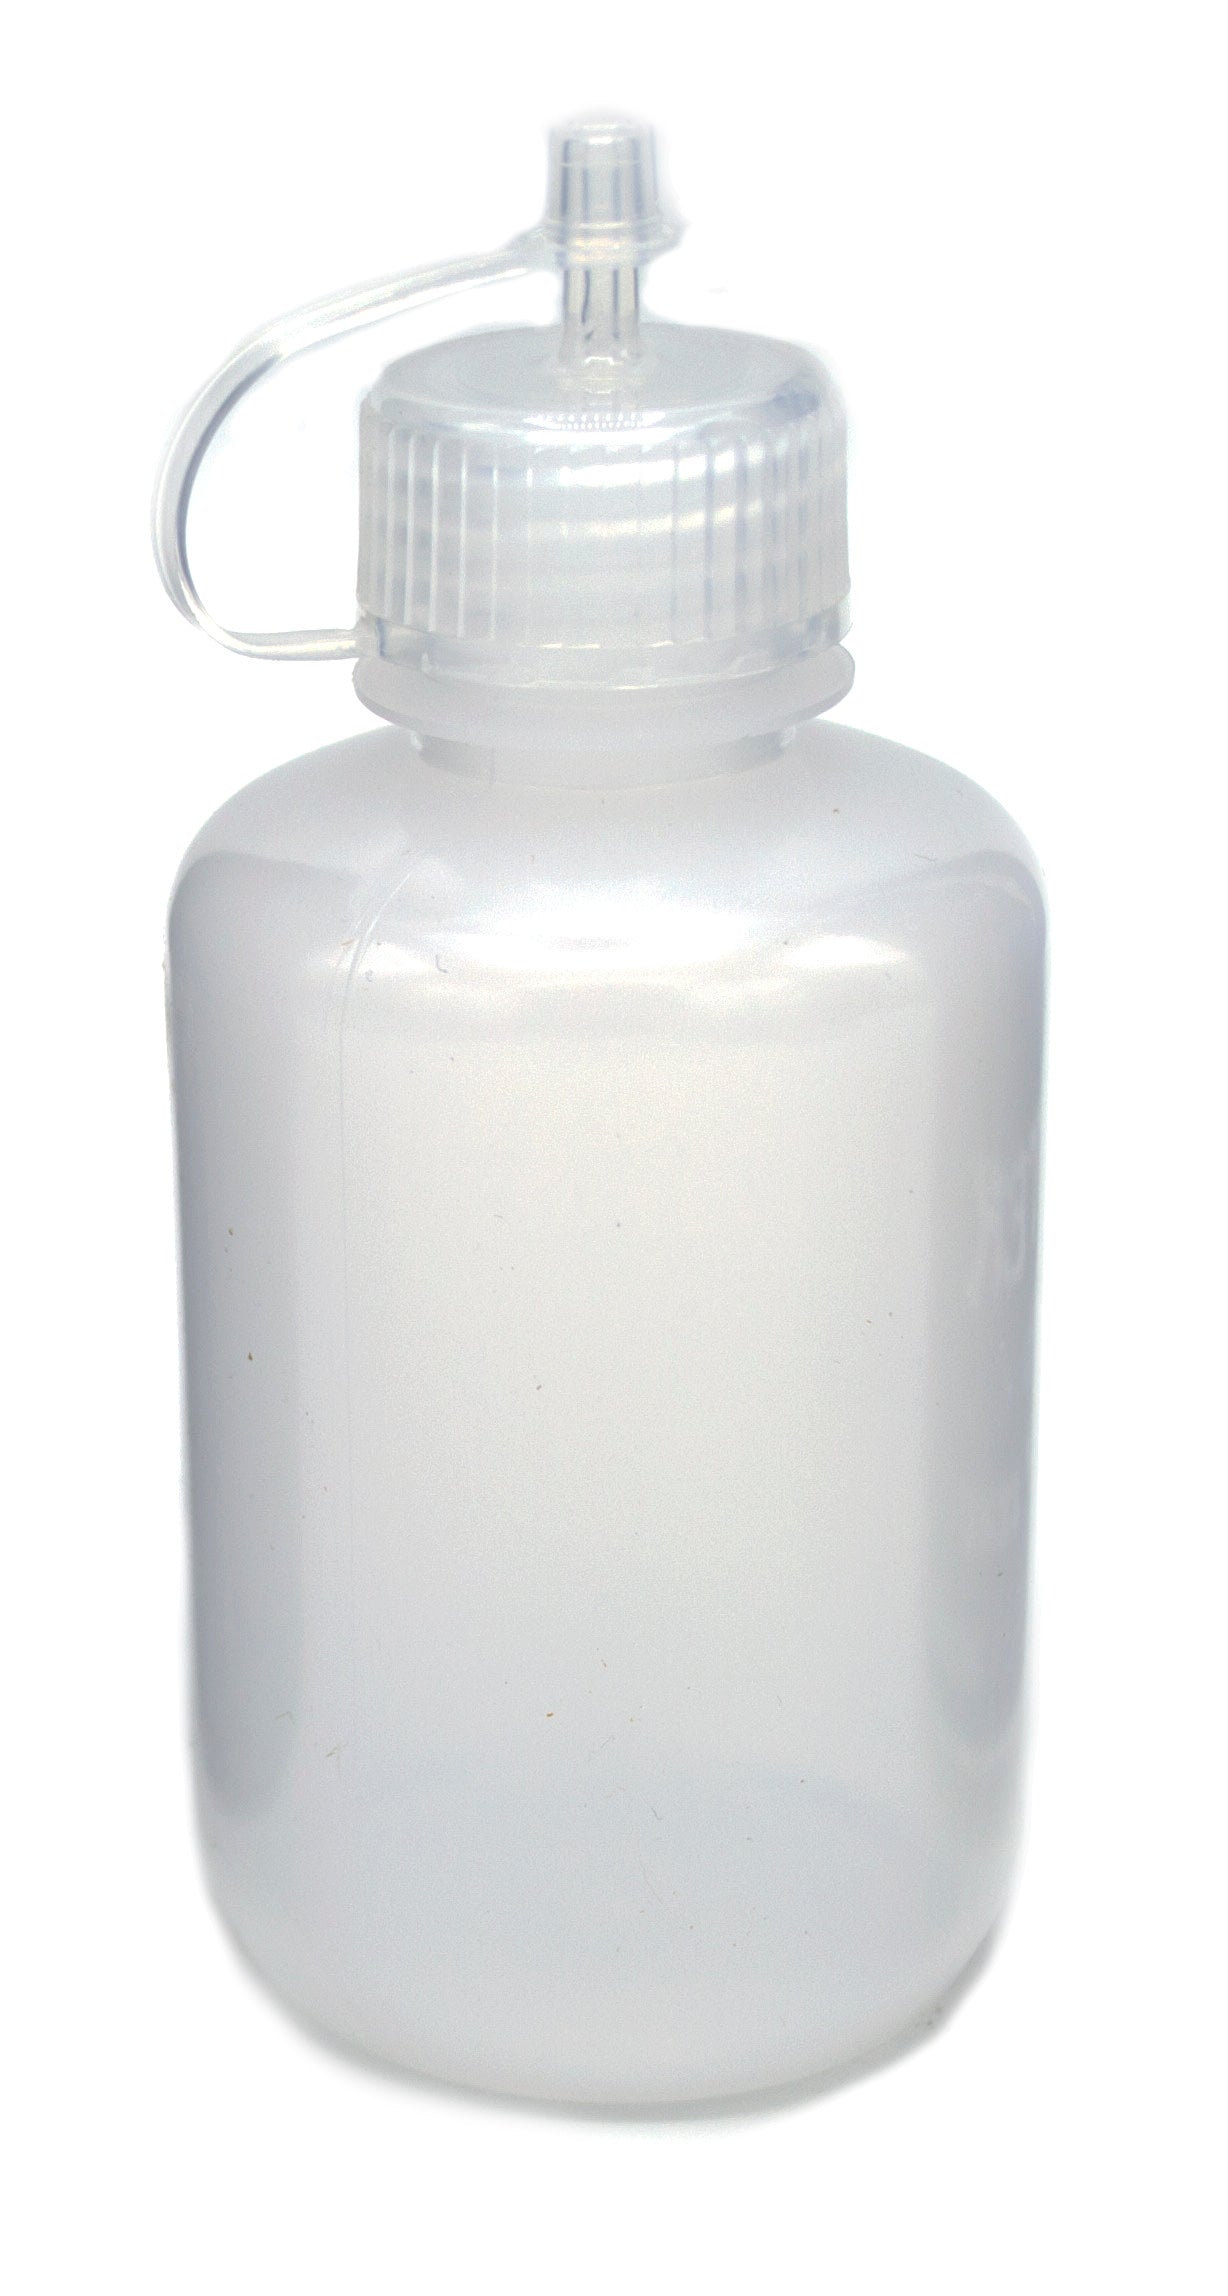 Low Density Polyethylene (LDPE) Plastic Dropping Bottle, 125 ml, Euro Design